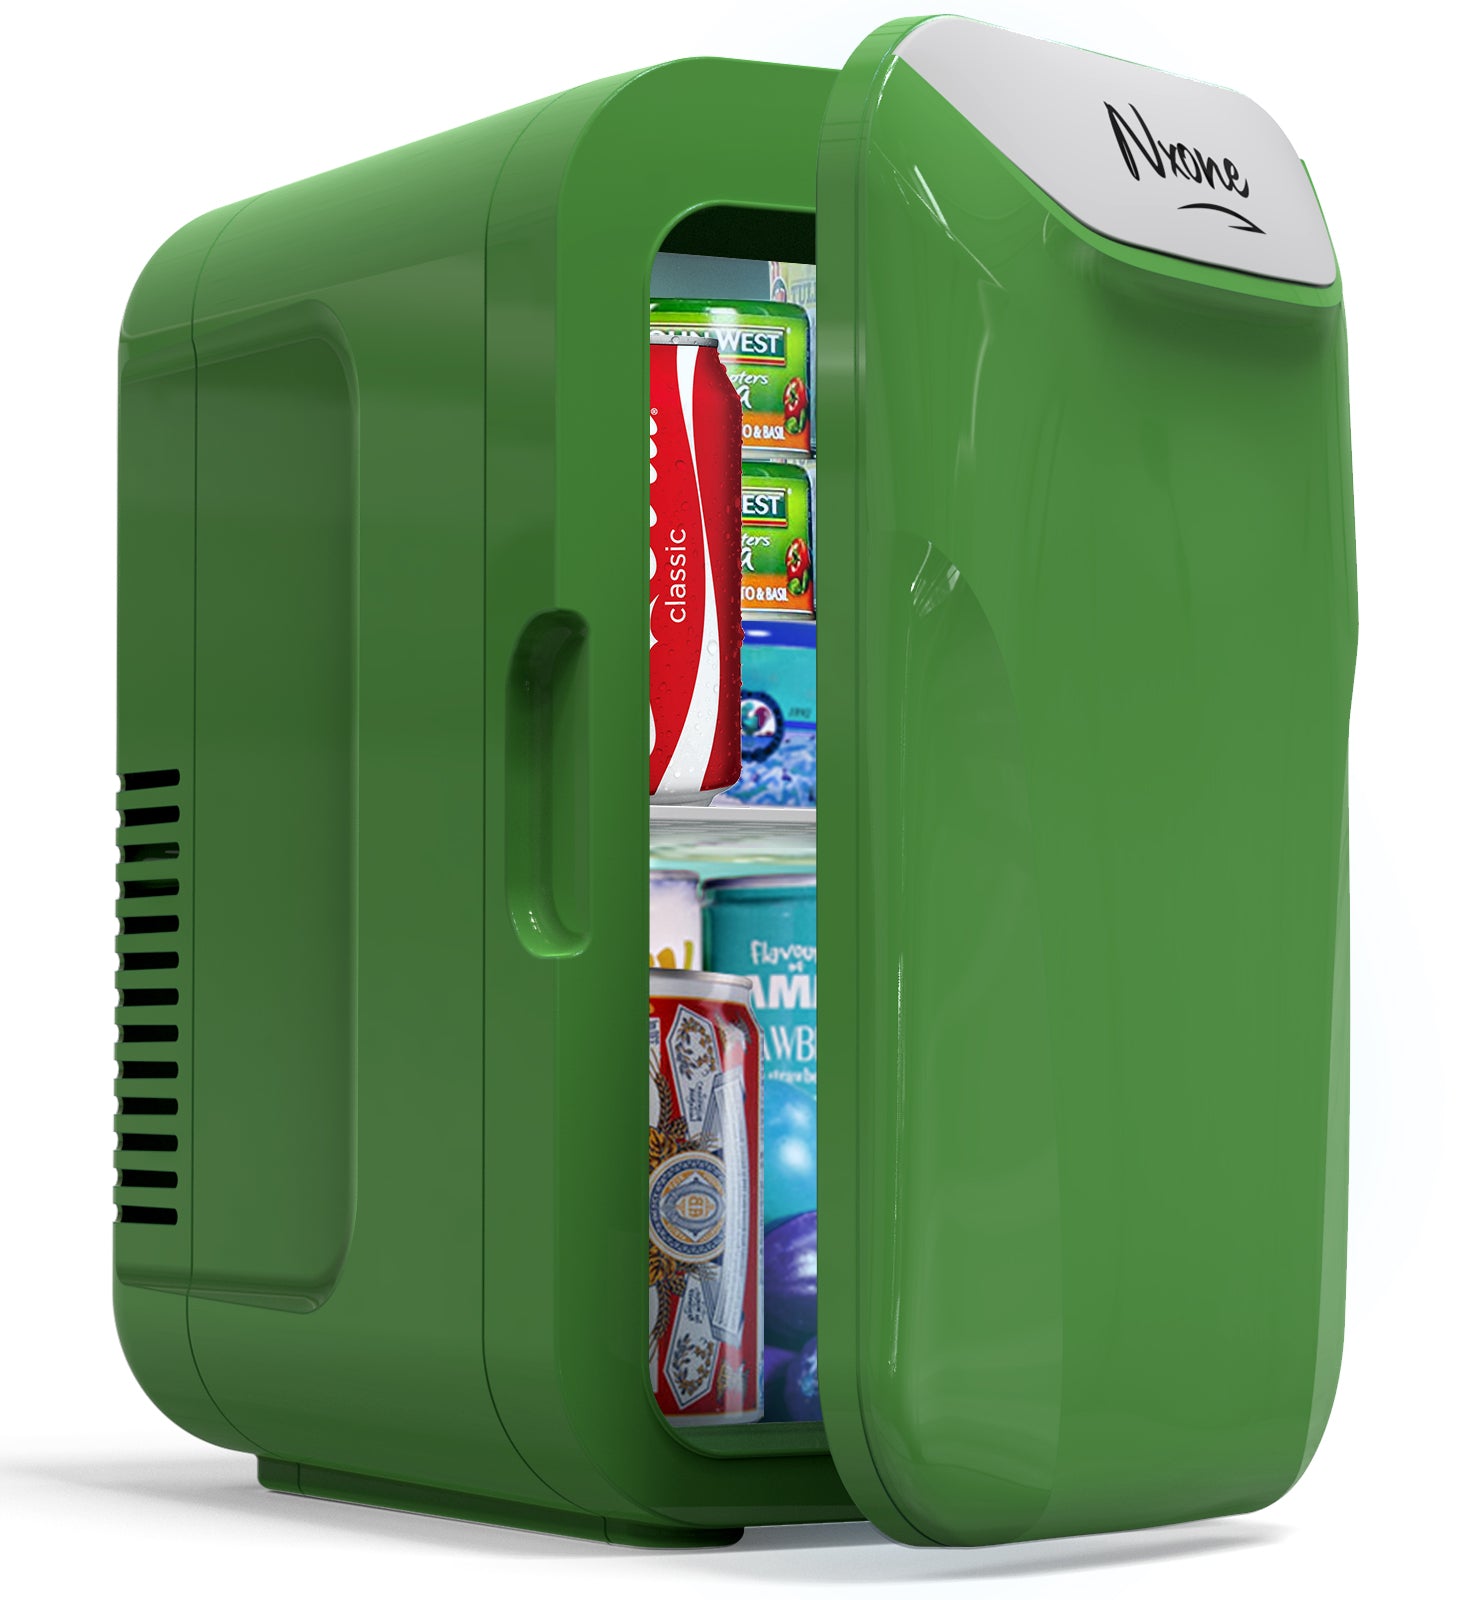 NXONE Mini Fridge,8 Can/6 Liter Small Refrigerator,110VAC/ 12V DC Port